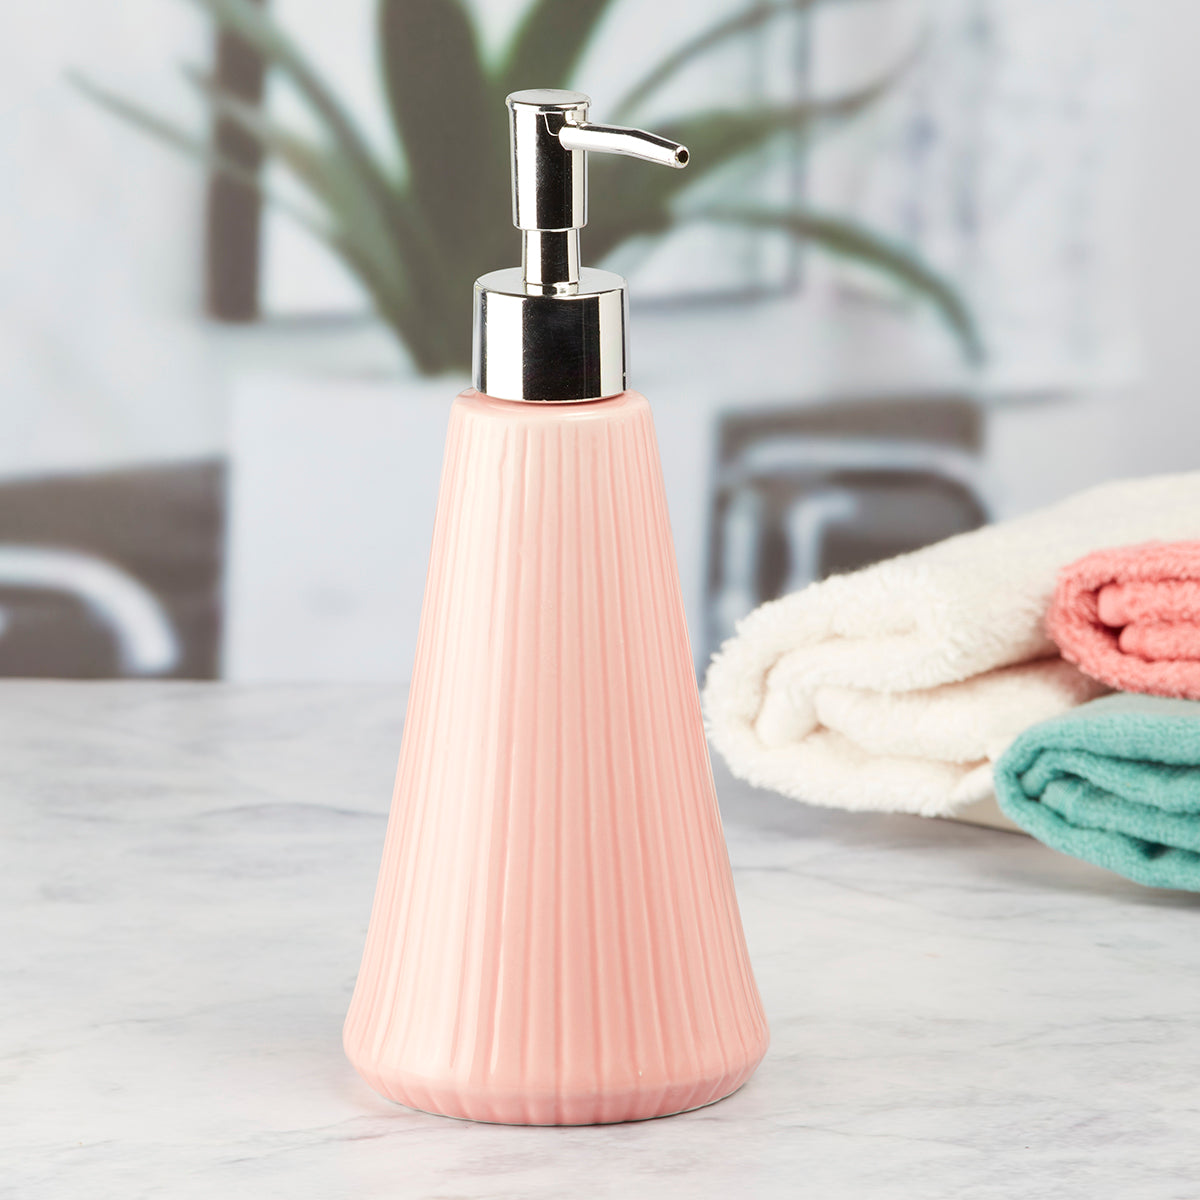 Ceramic Soap Dispenser handwash Pump for Bathroom, Set of 1, Pink (8057)